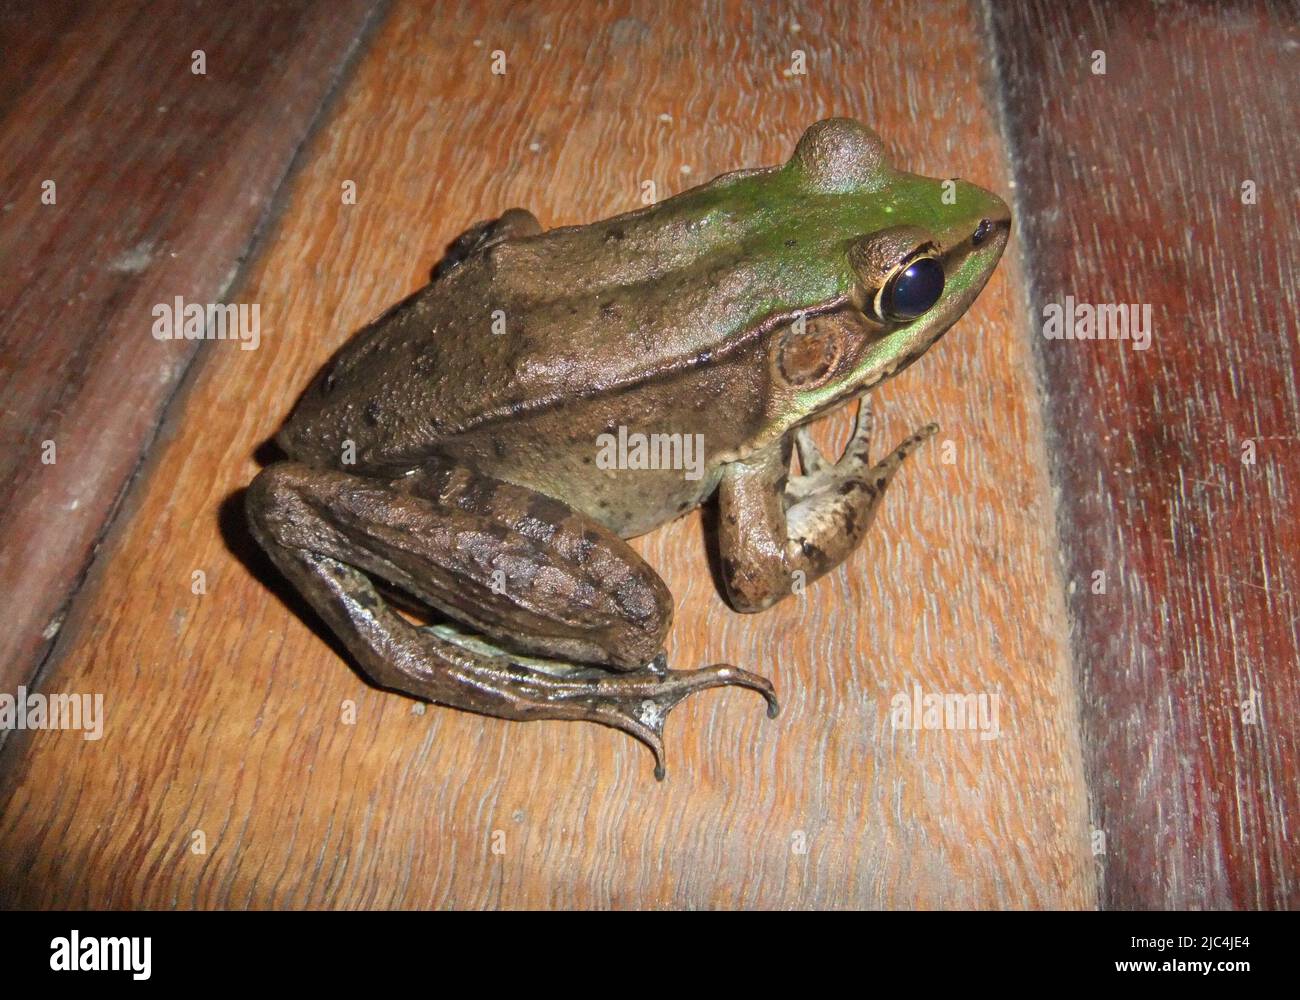 American Bullfrog (Lithobates catesbeianus) on wooden floor multicoloured boards Stock Photo